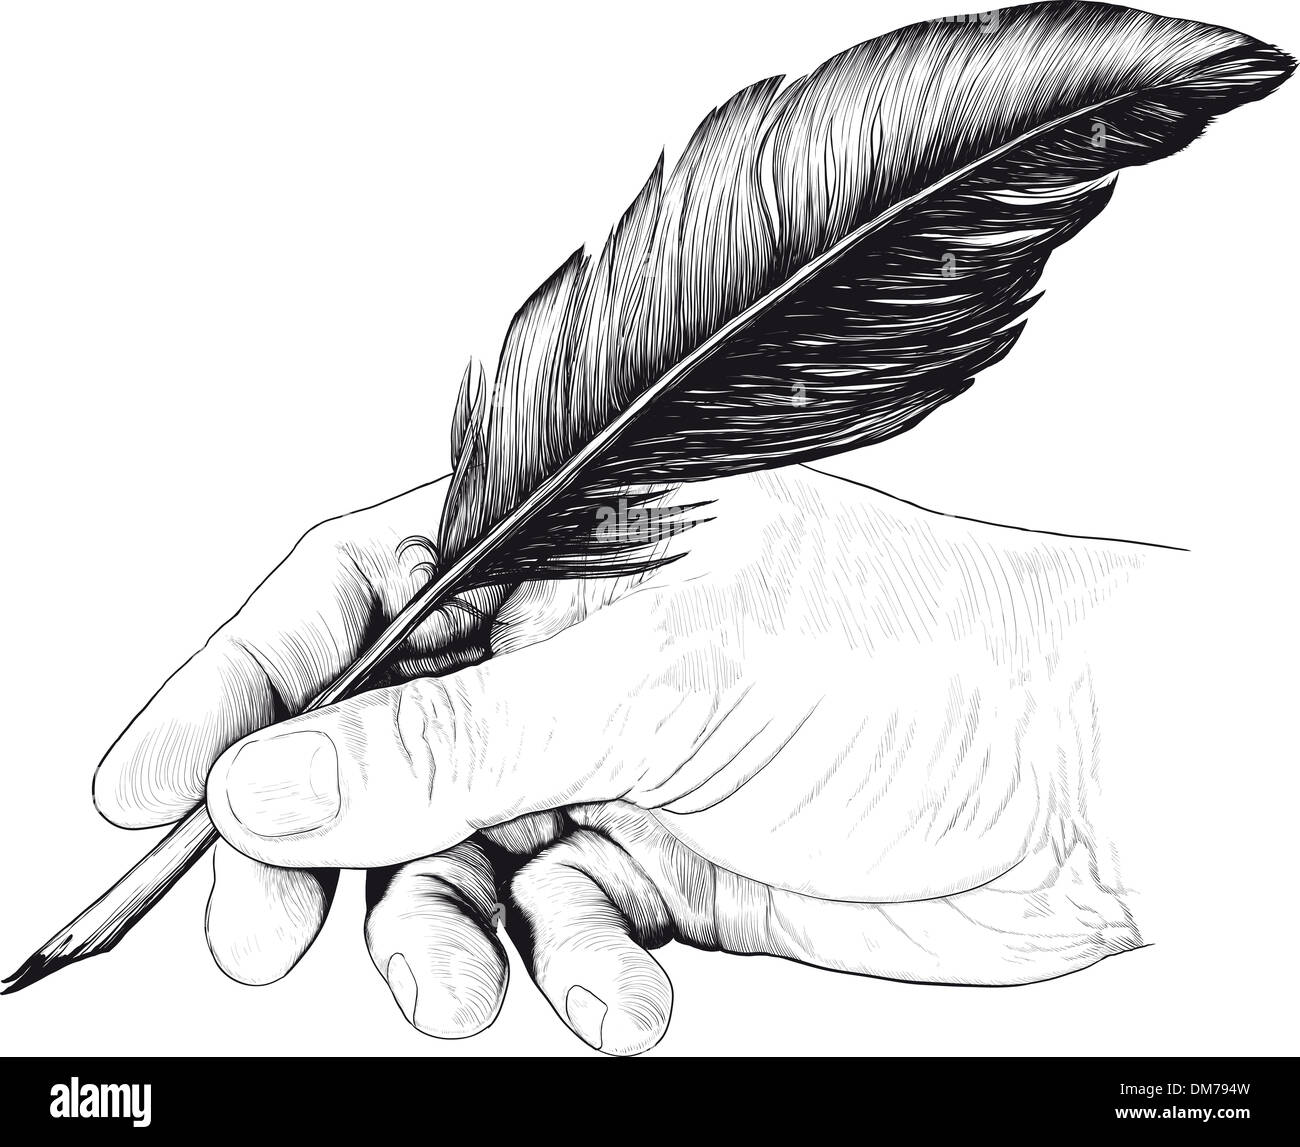 Dessin de la main avec un stylo plume Photo Stock - Alamy